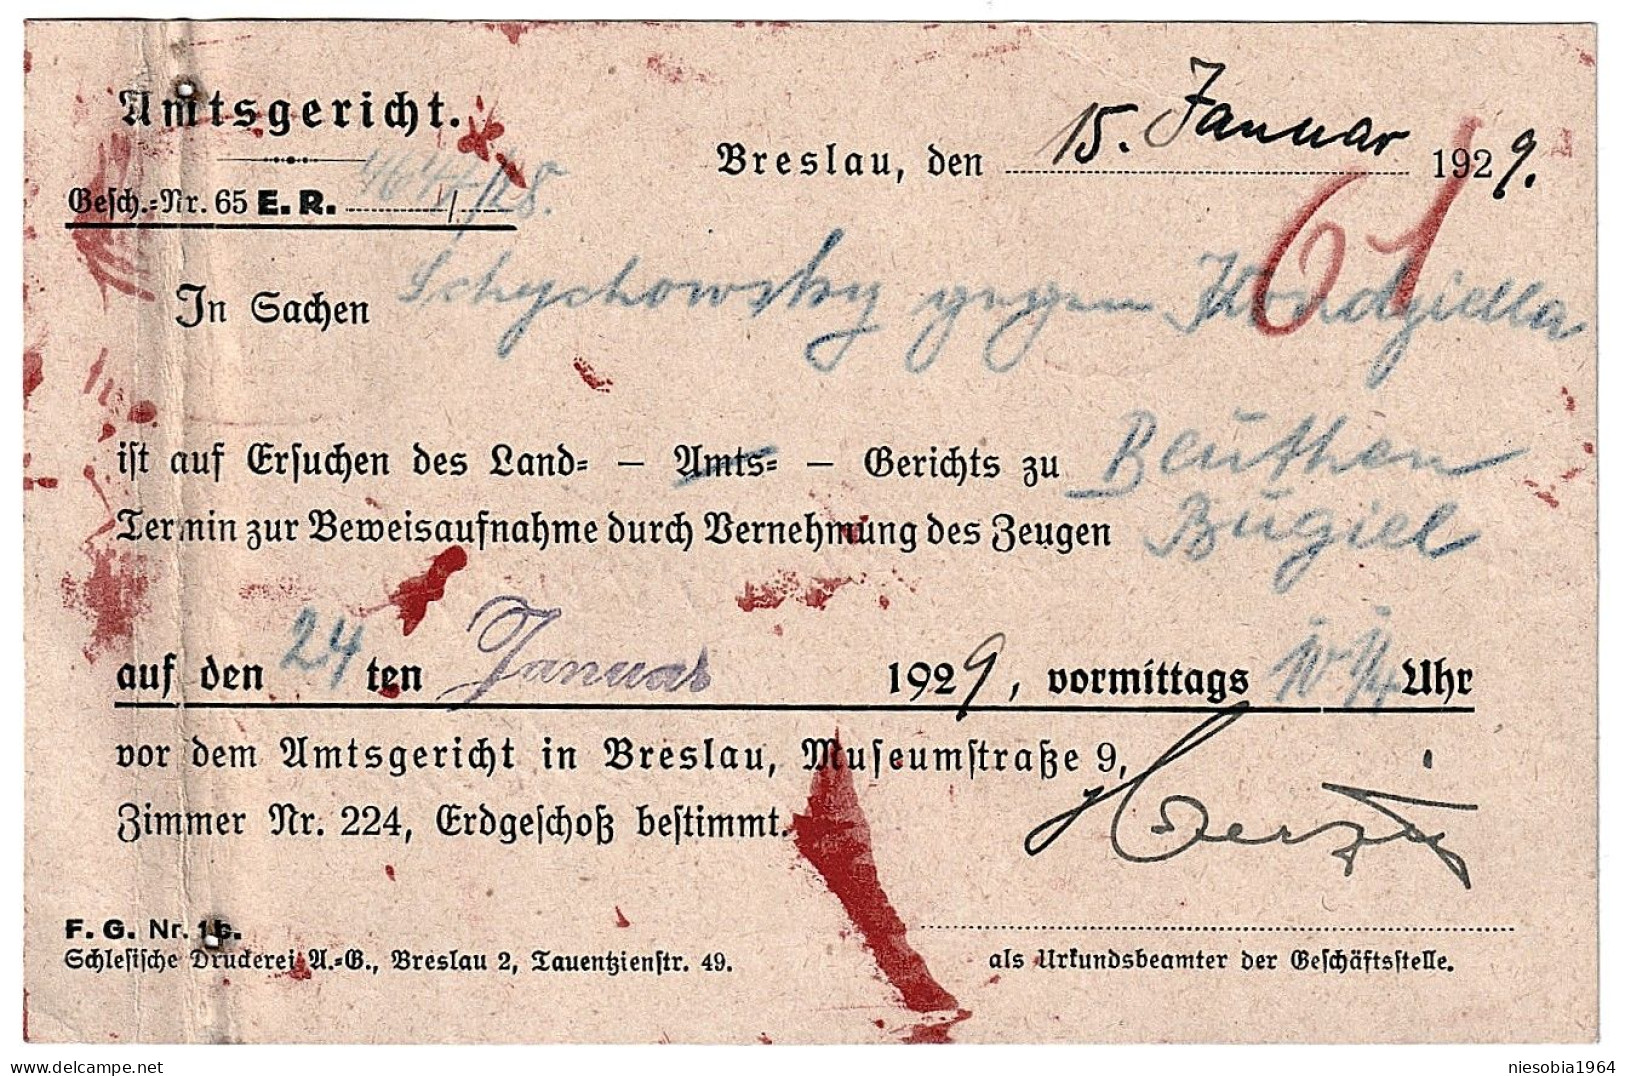 Prussia. Breslau District Court Companies Postcard Special Seal Judicial Authorities Breslau DR 008 - June 16, 1929 - Briefkaarten